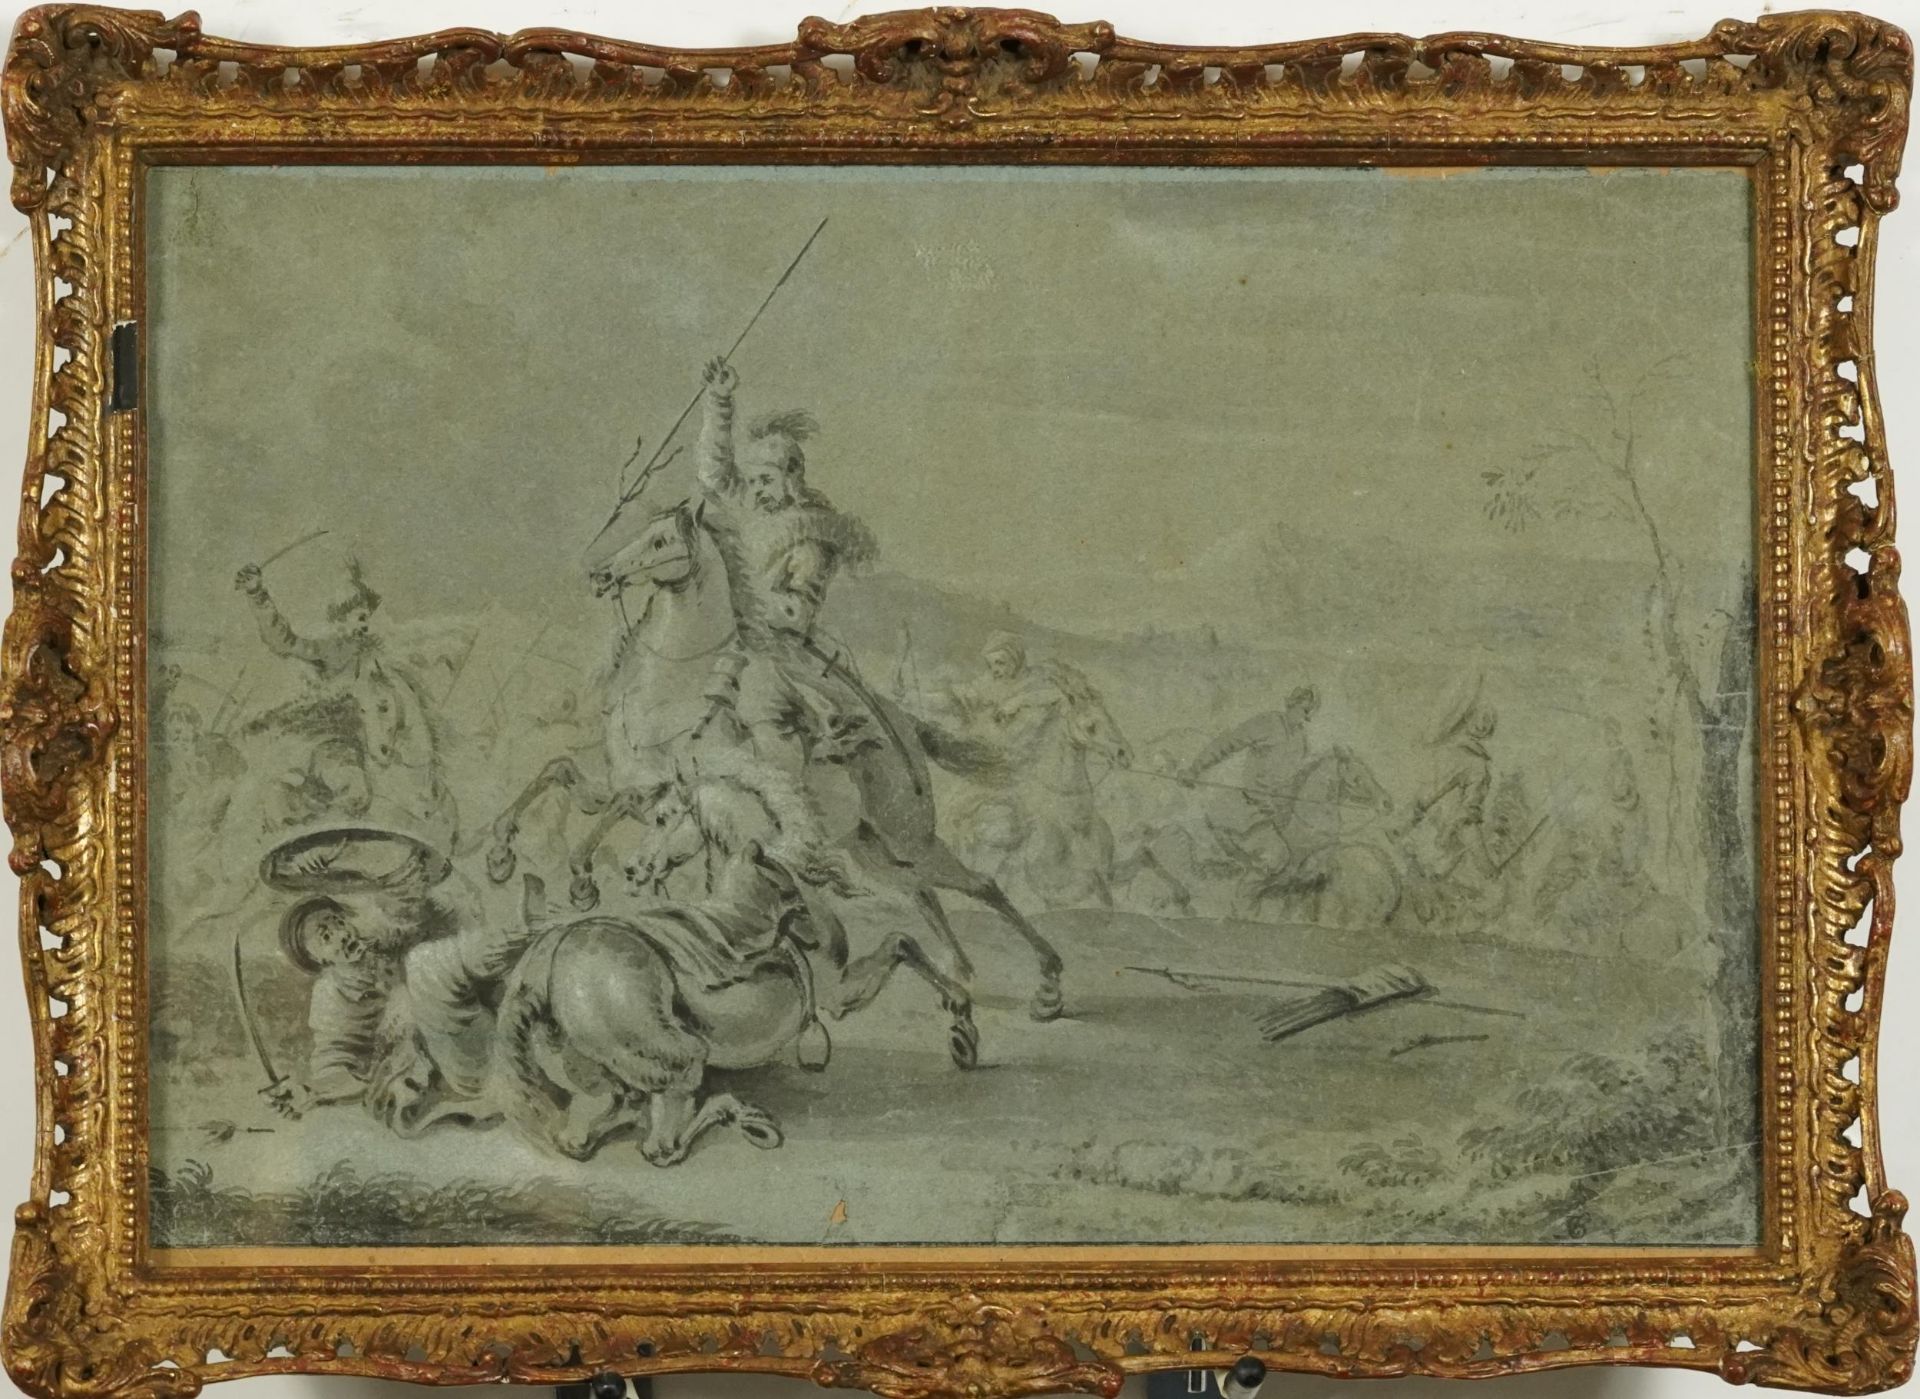 Battle scene with figures on horseback, 18th century Swiss school heightened watercolour, - Image 2 of 4